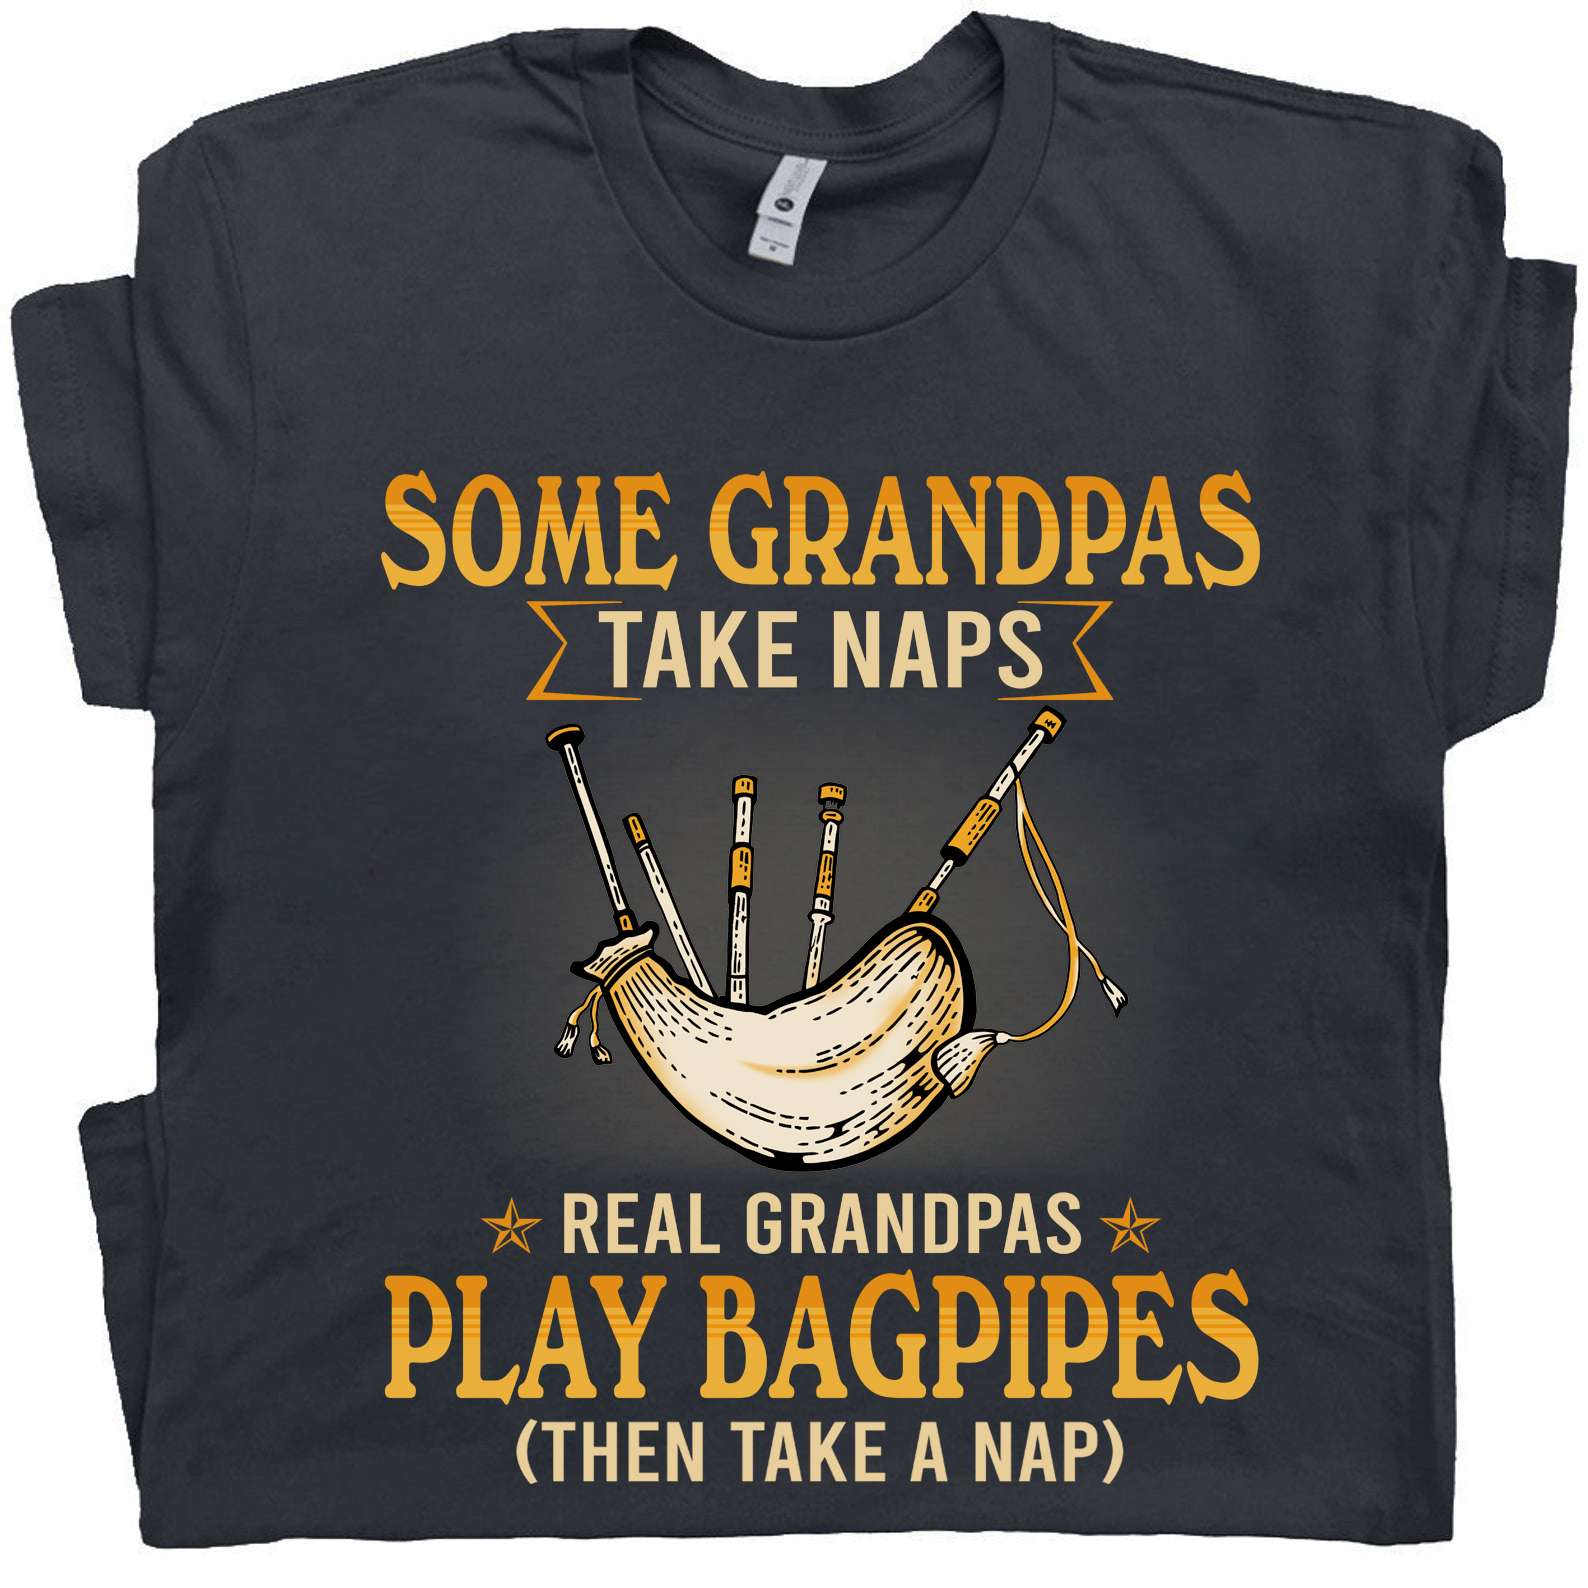 Some grandpas take naps real grandpas play bagpipes - Bagpipes Scotland instrument